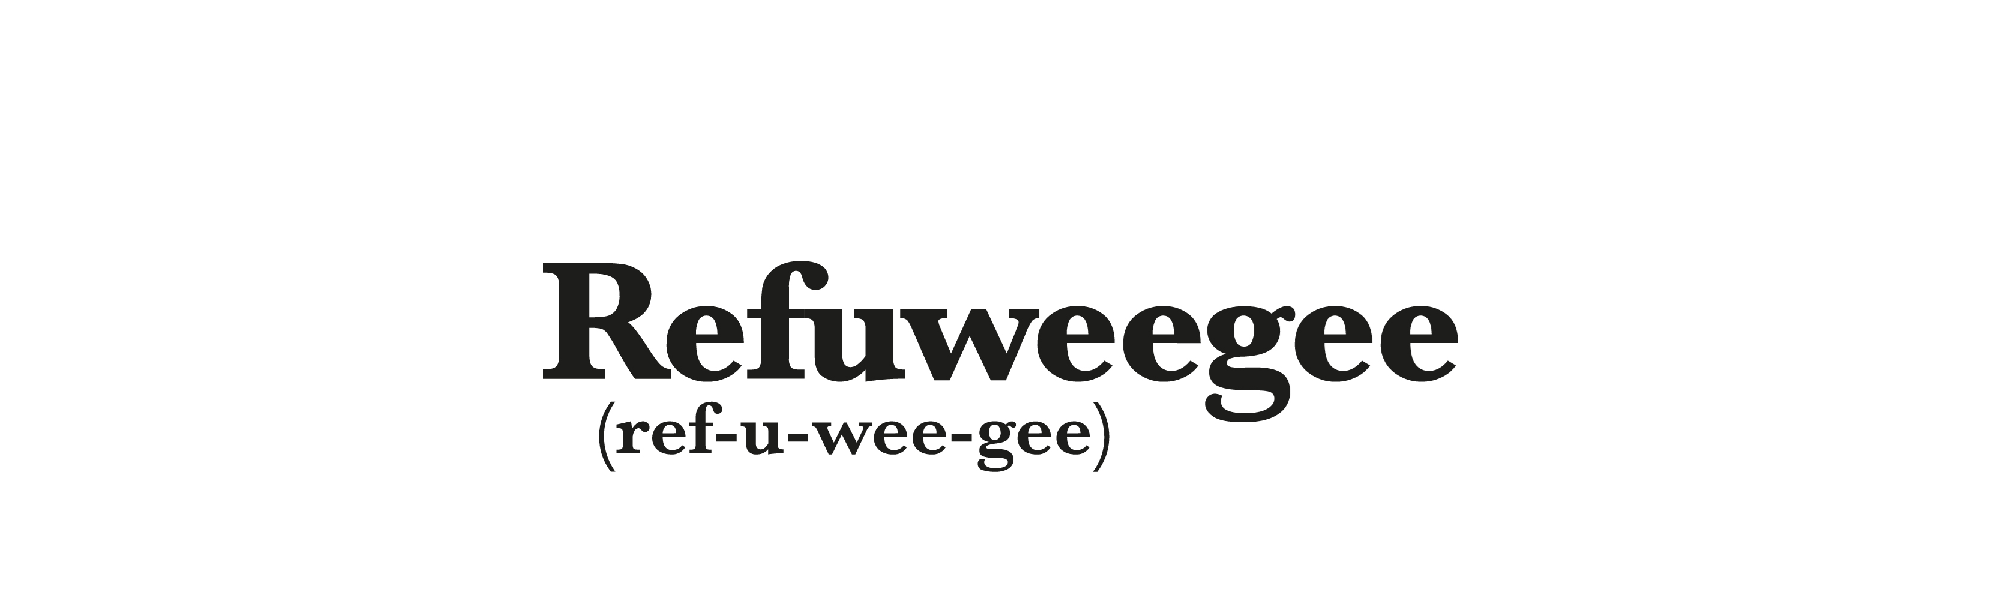 refuweegee logo